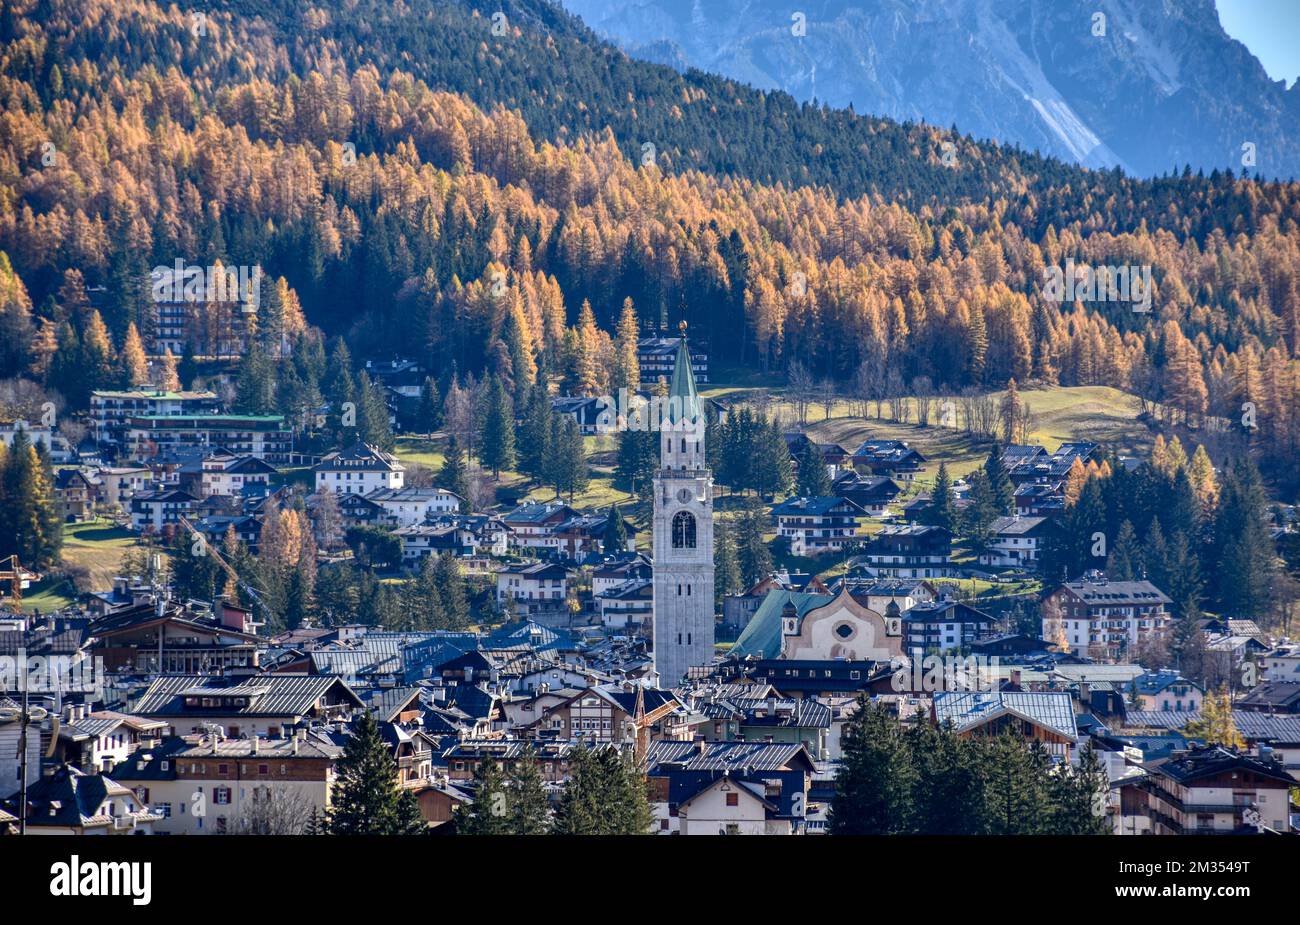 Cortina d’Ampezzo, Cortina, Stadt, Kirche, Skiort, Norditalien, Dolomiti Superski, Dolomiten, Schi, Ski, Haus, Häuser, Tourismus, Wintersport, Nobel, Stockfoto